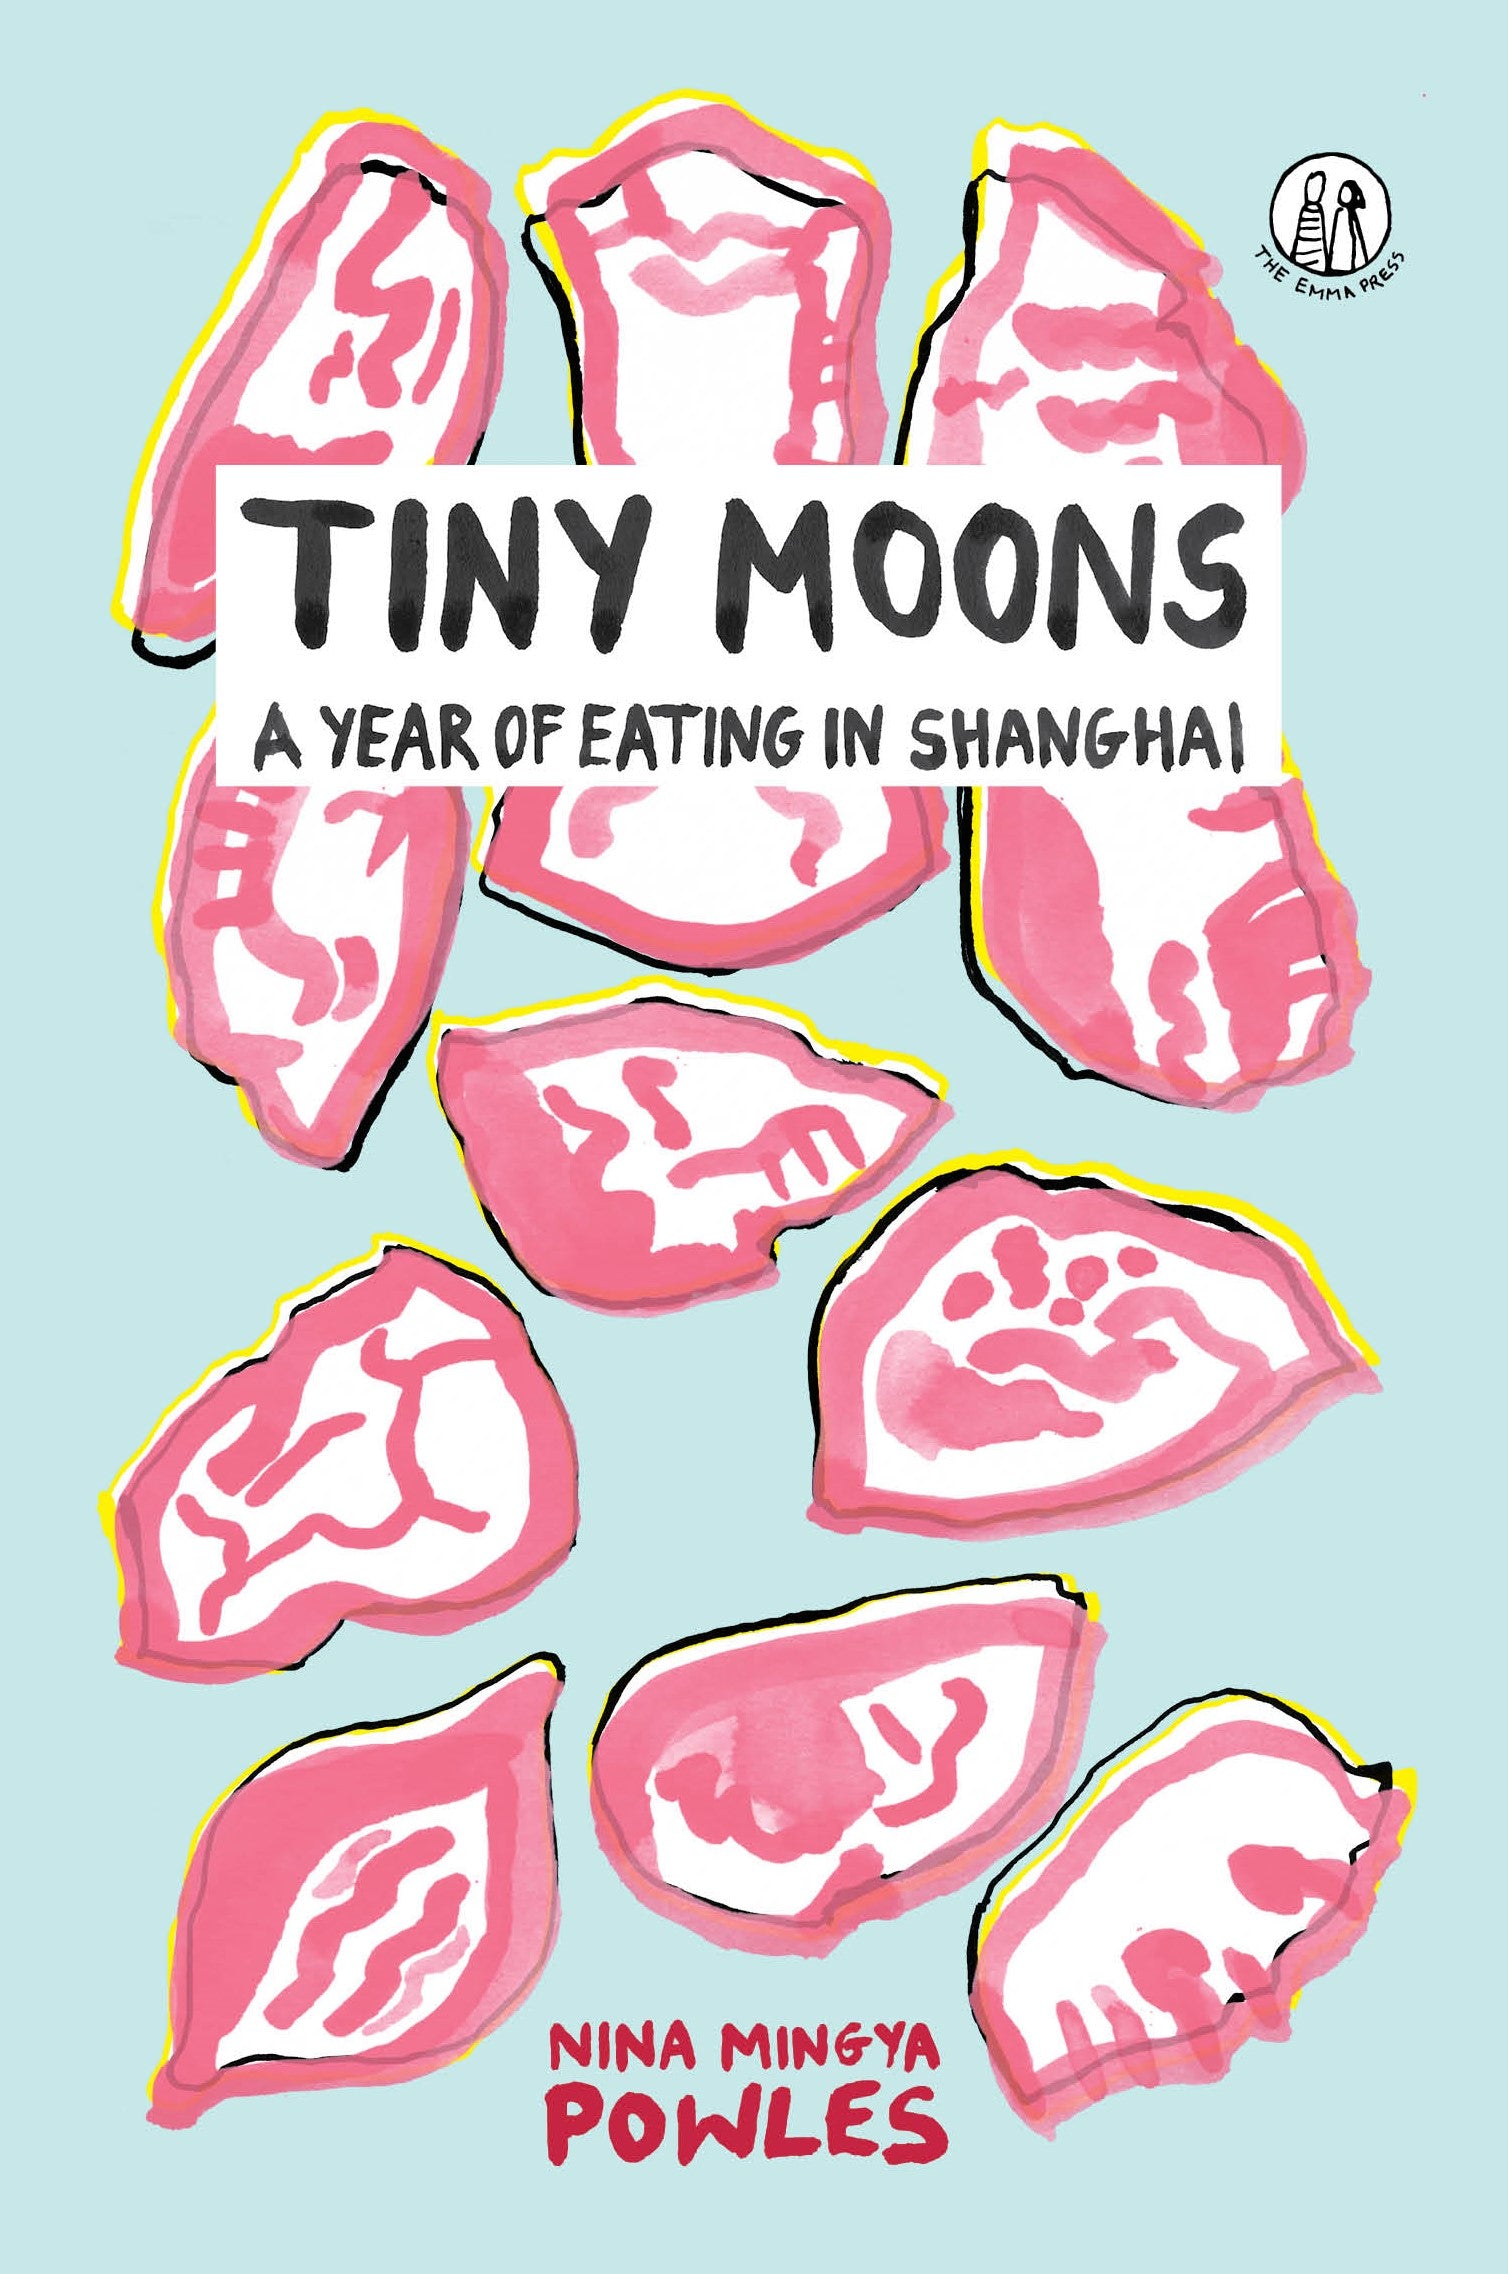 Tiny Moons: A Year of Eating in Shanghai (Nina Mingya Powles)